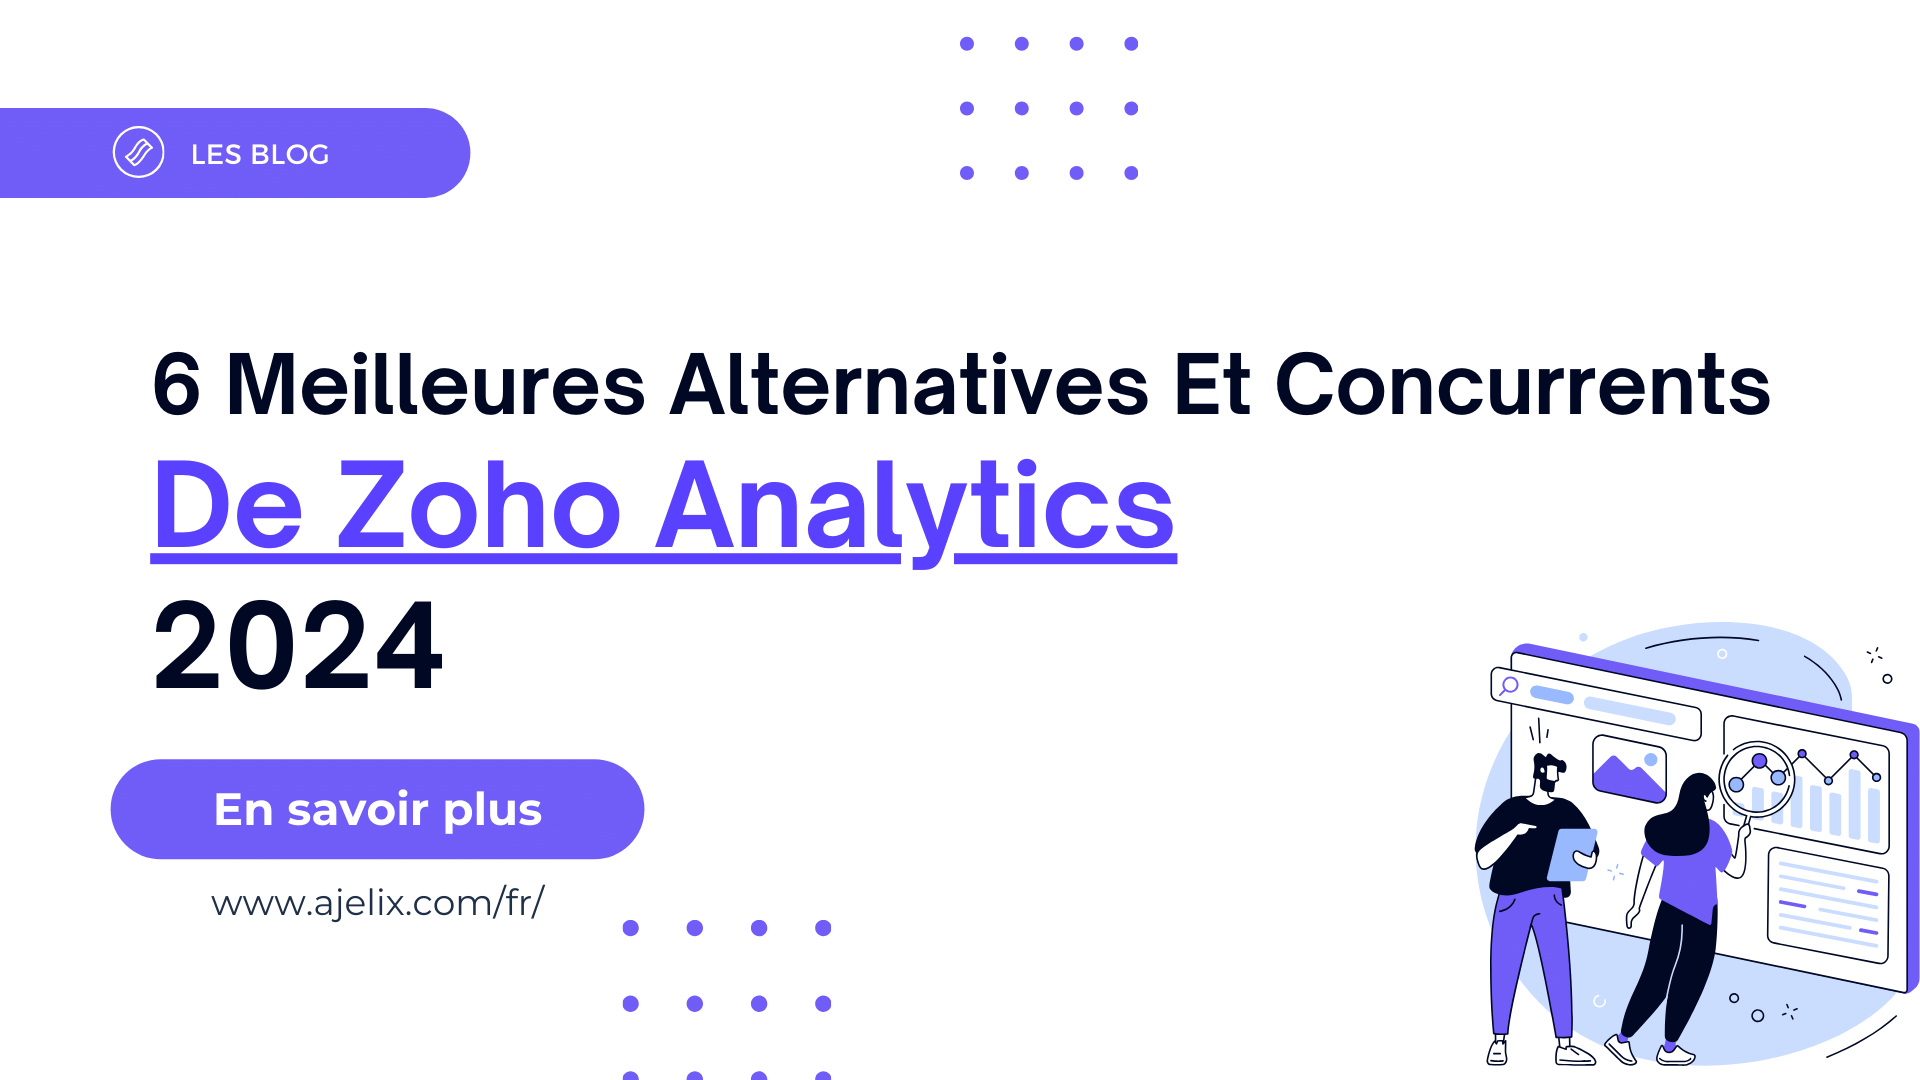 6 Meilleures Alternatives Et Concurrents De Zoho Analytics 2024